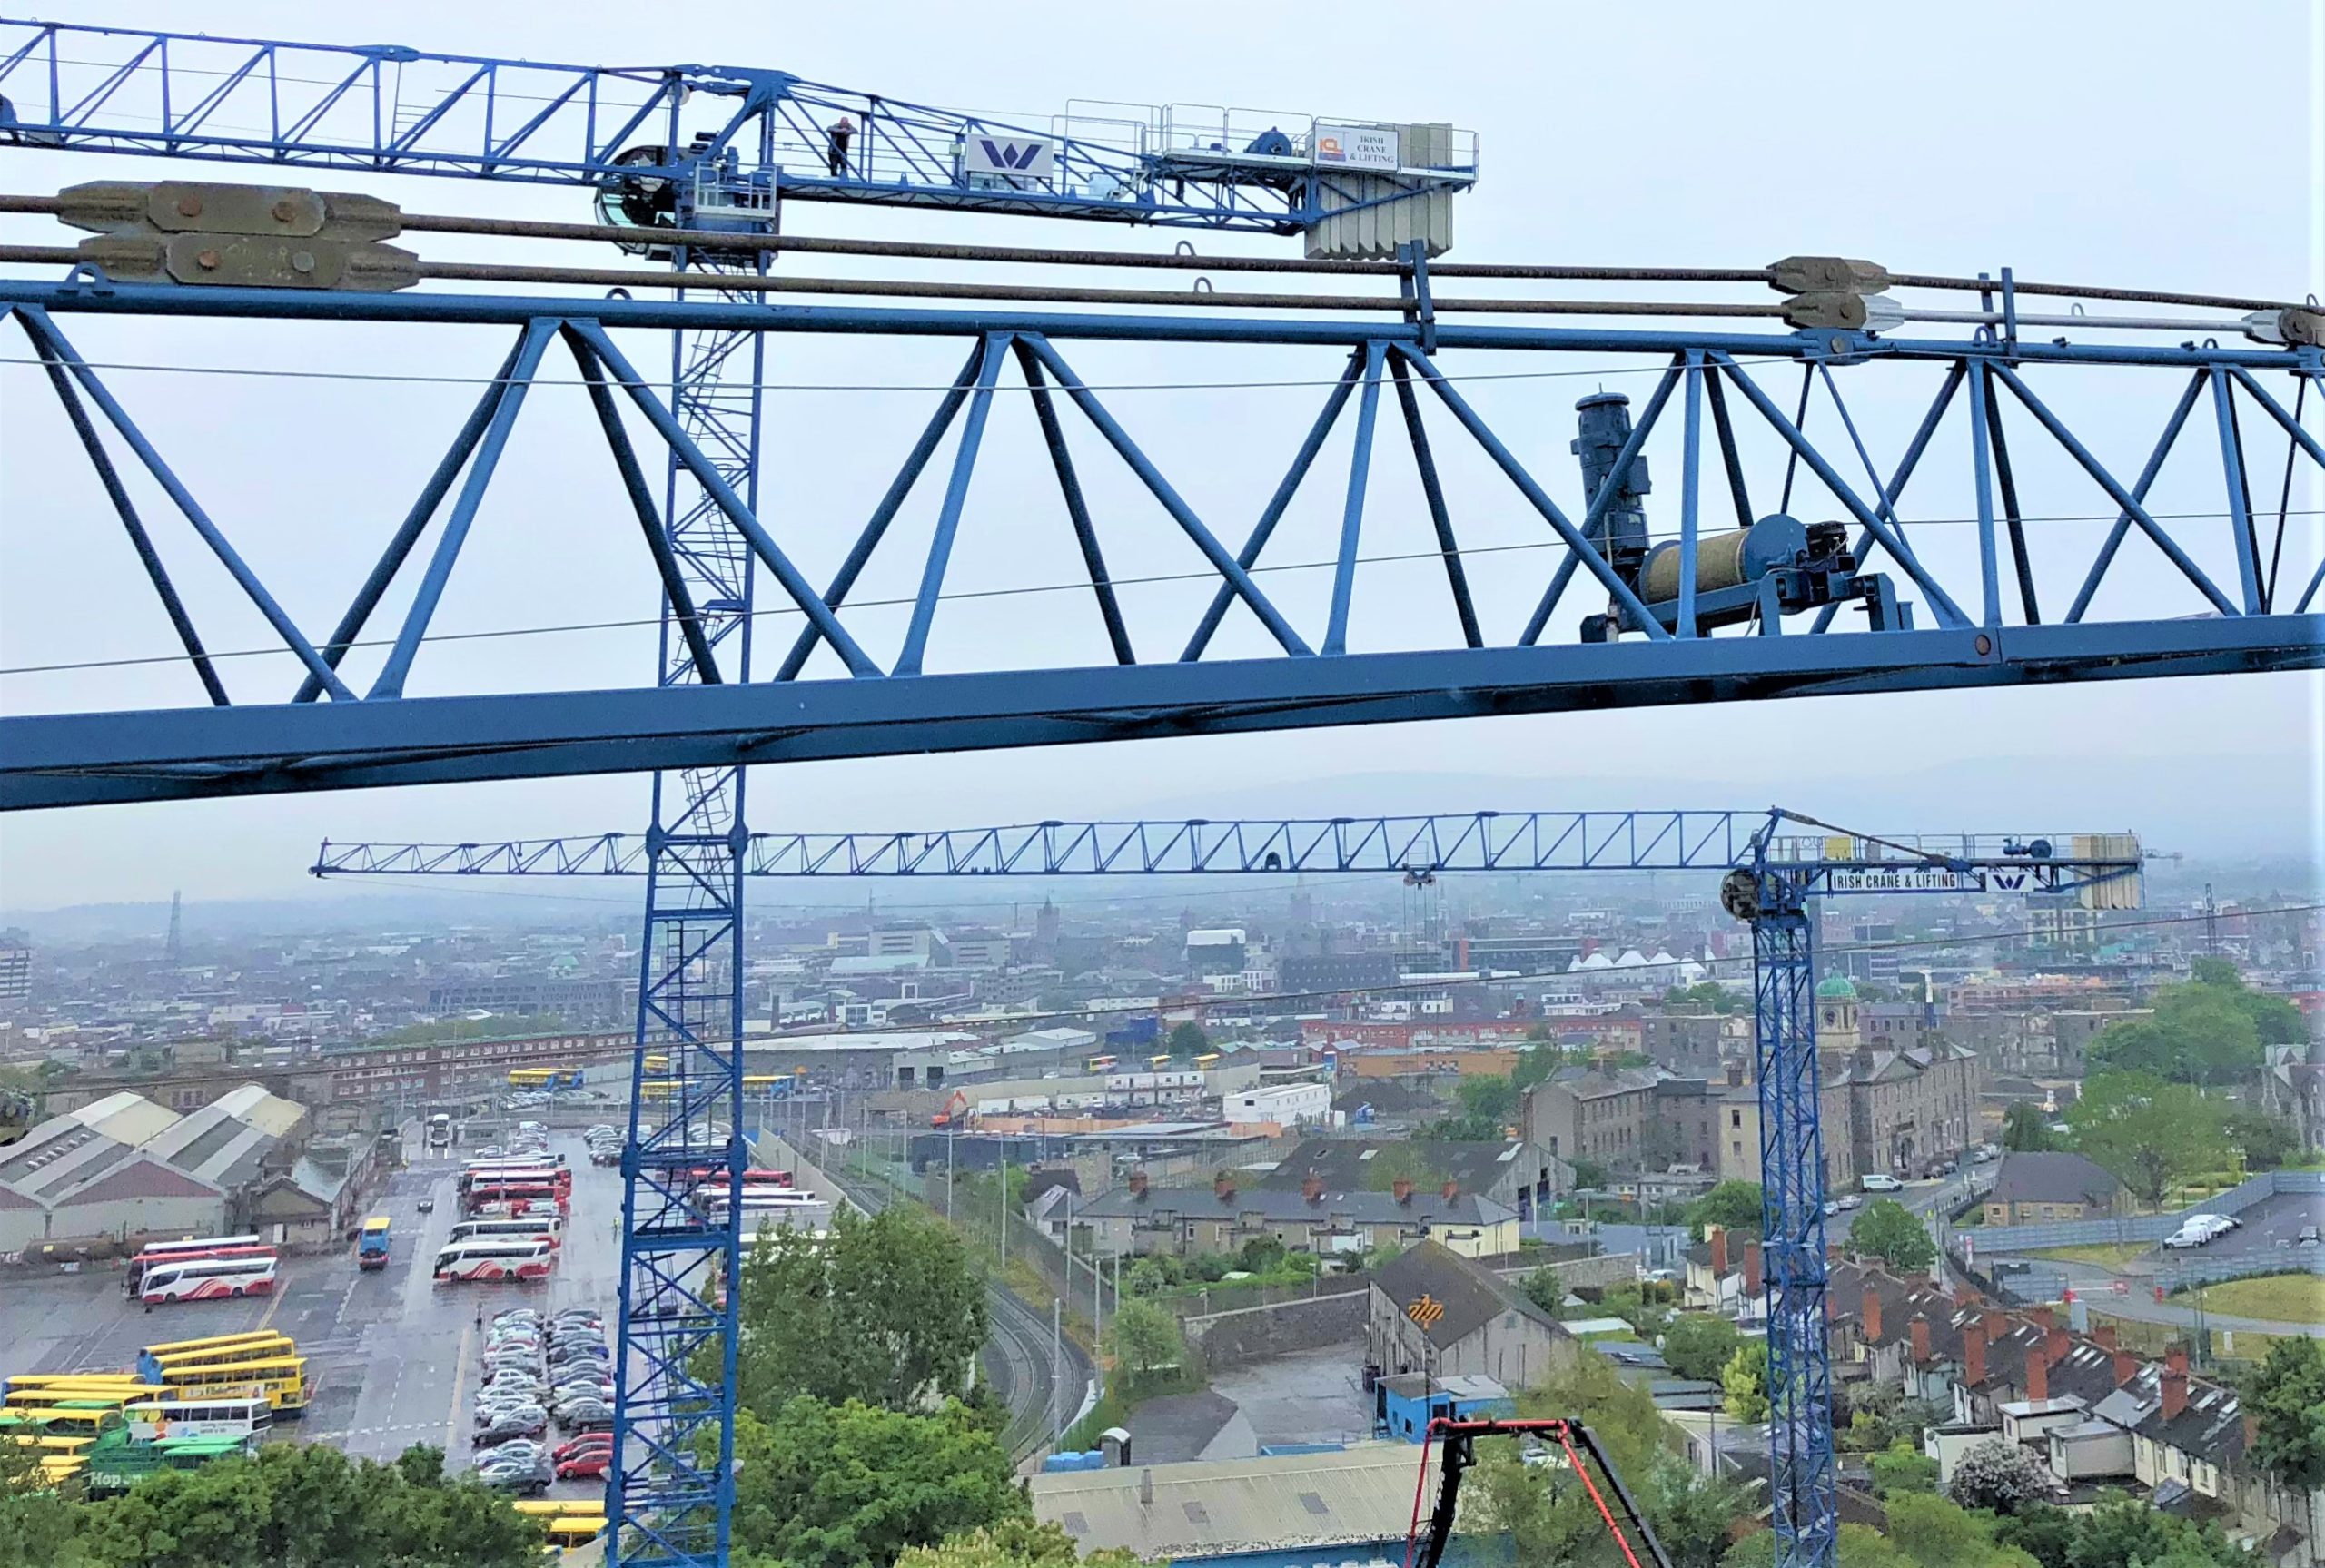 Cranes Today: Irish Cranes brings Raimondis to Dublin